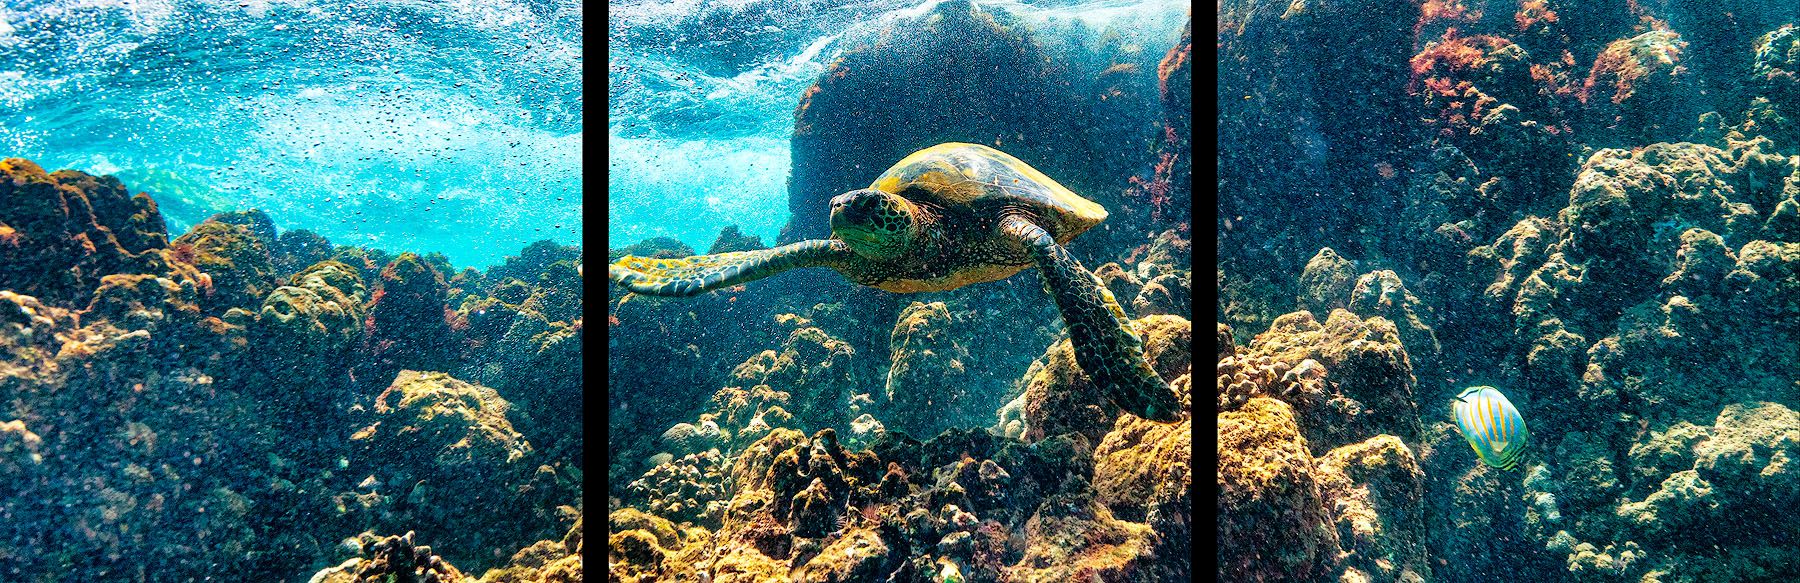 A Hawaiian Honu (green sea turtle) swims off the coast of maui in this panoramic photograph by Hawaiian artist Andrew Shoemaker